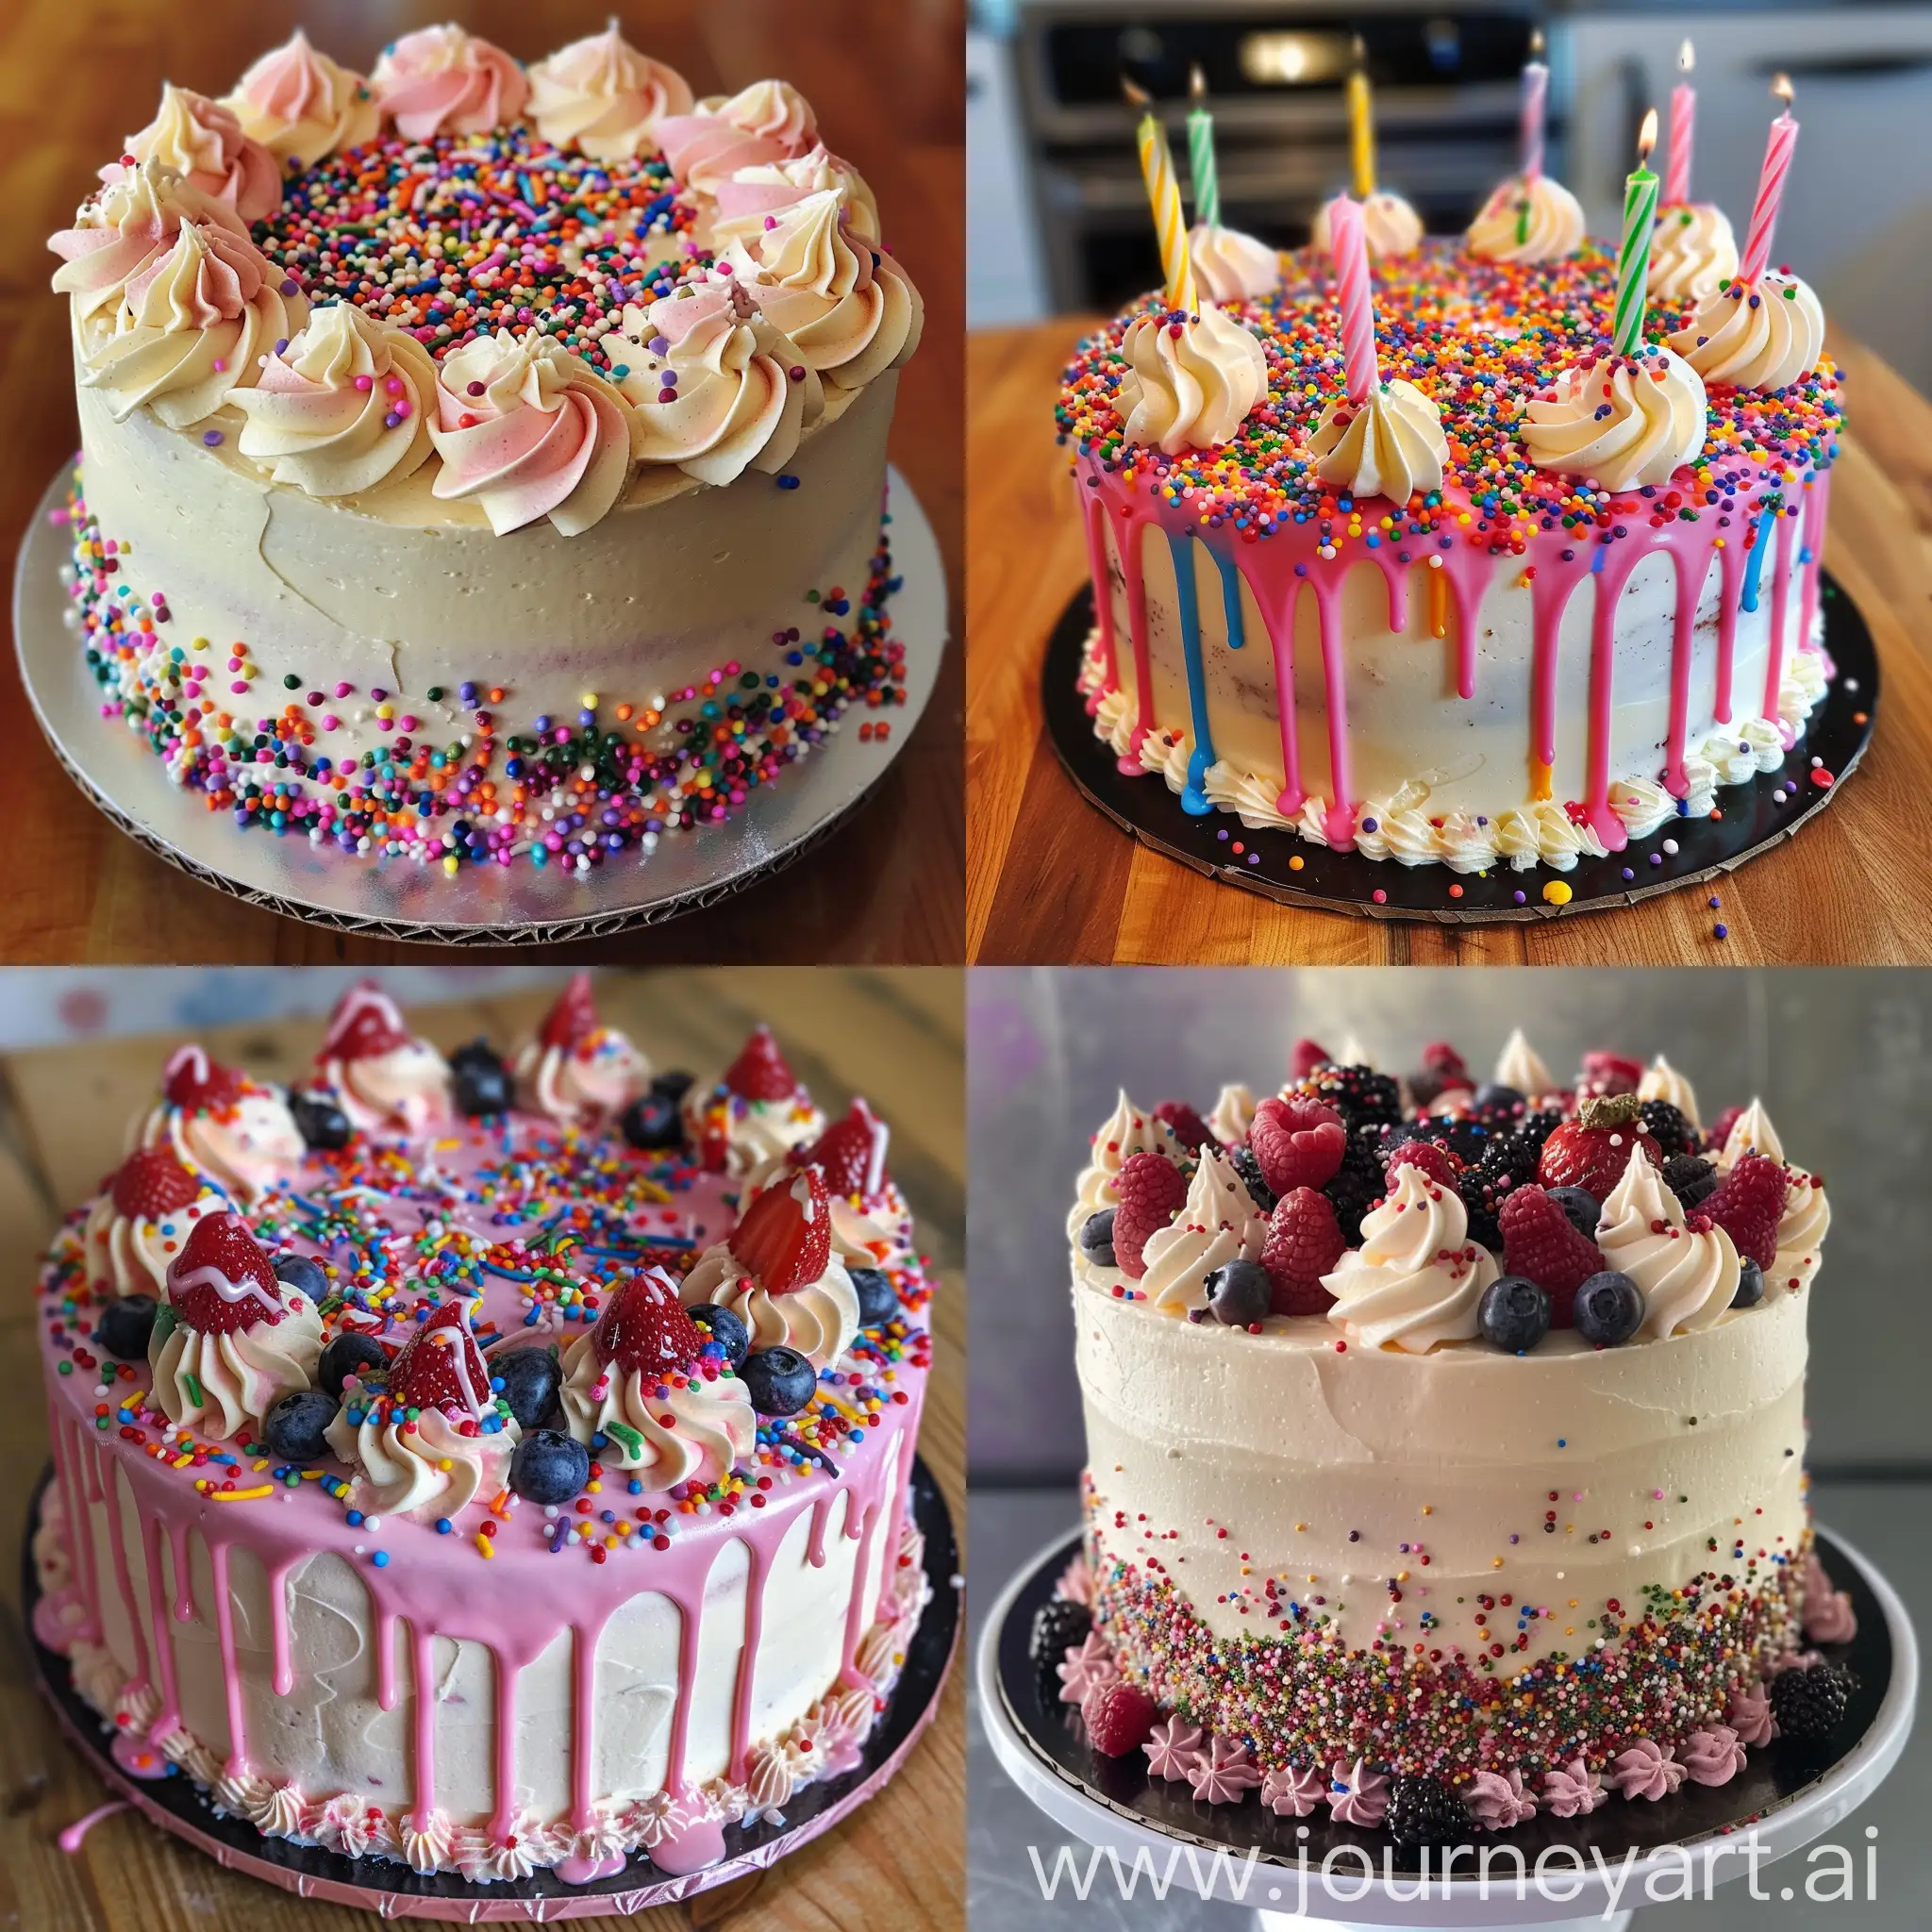 Celebrating-Reddit-Cake-Day-Joyful-Cake-Sharing-on-the-Sixth-Anniversary